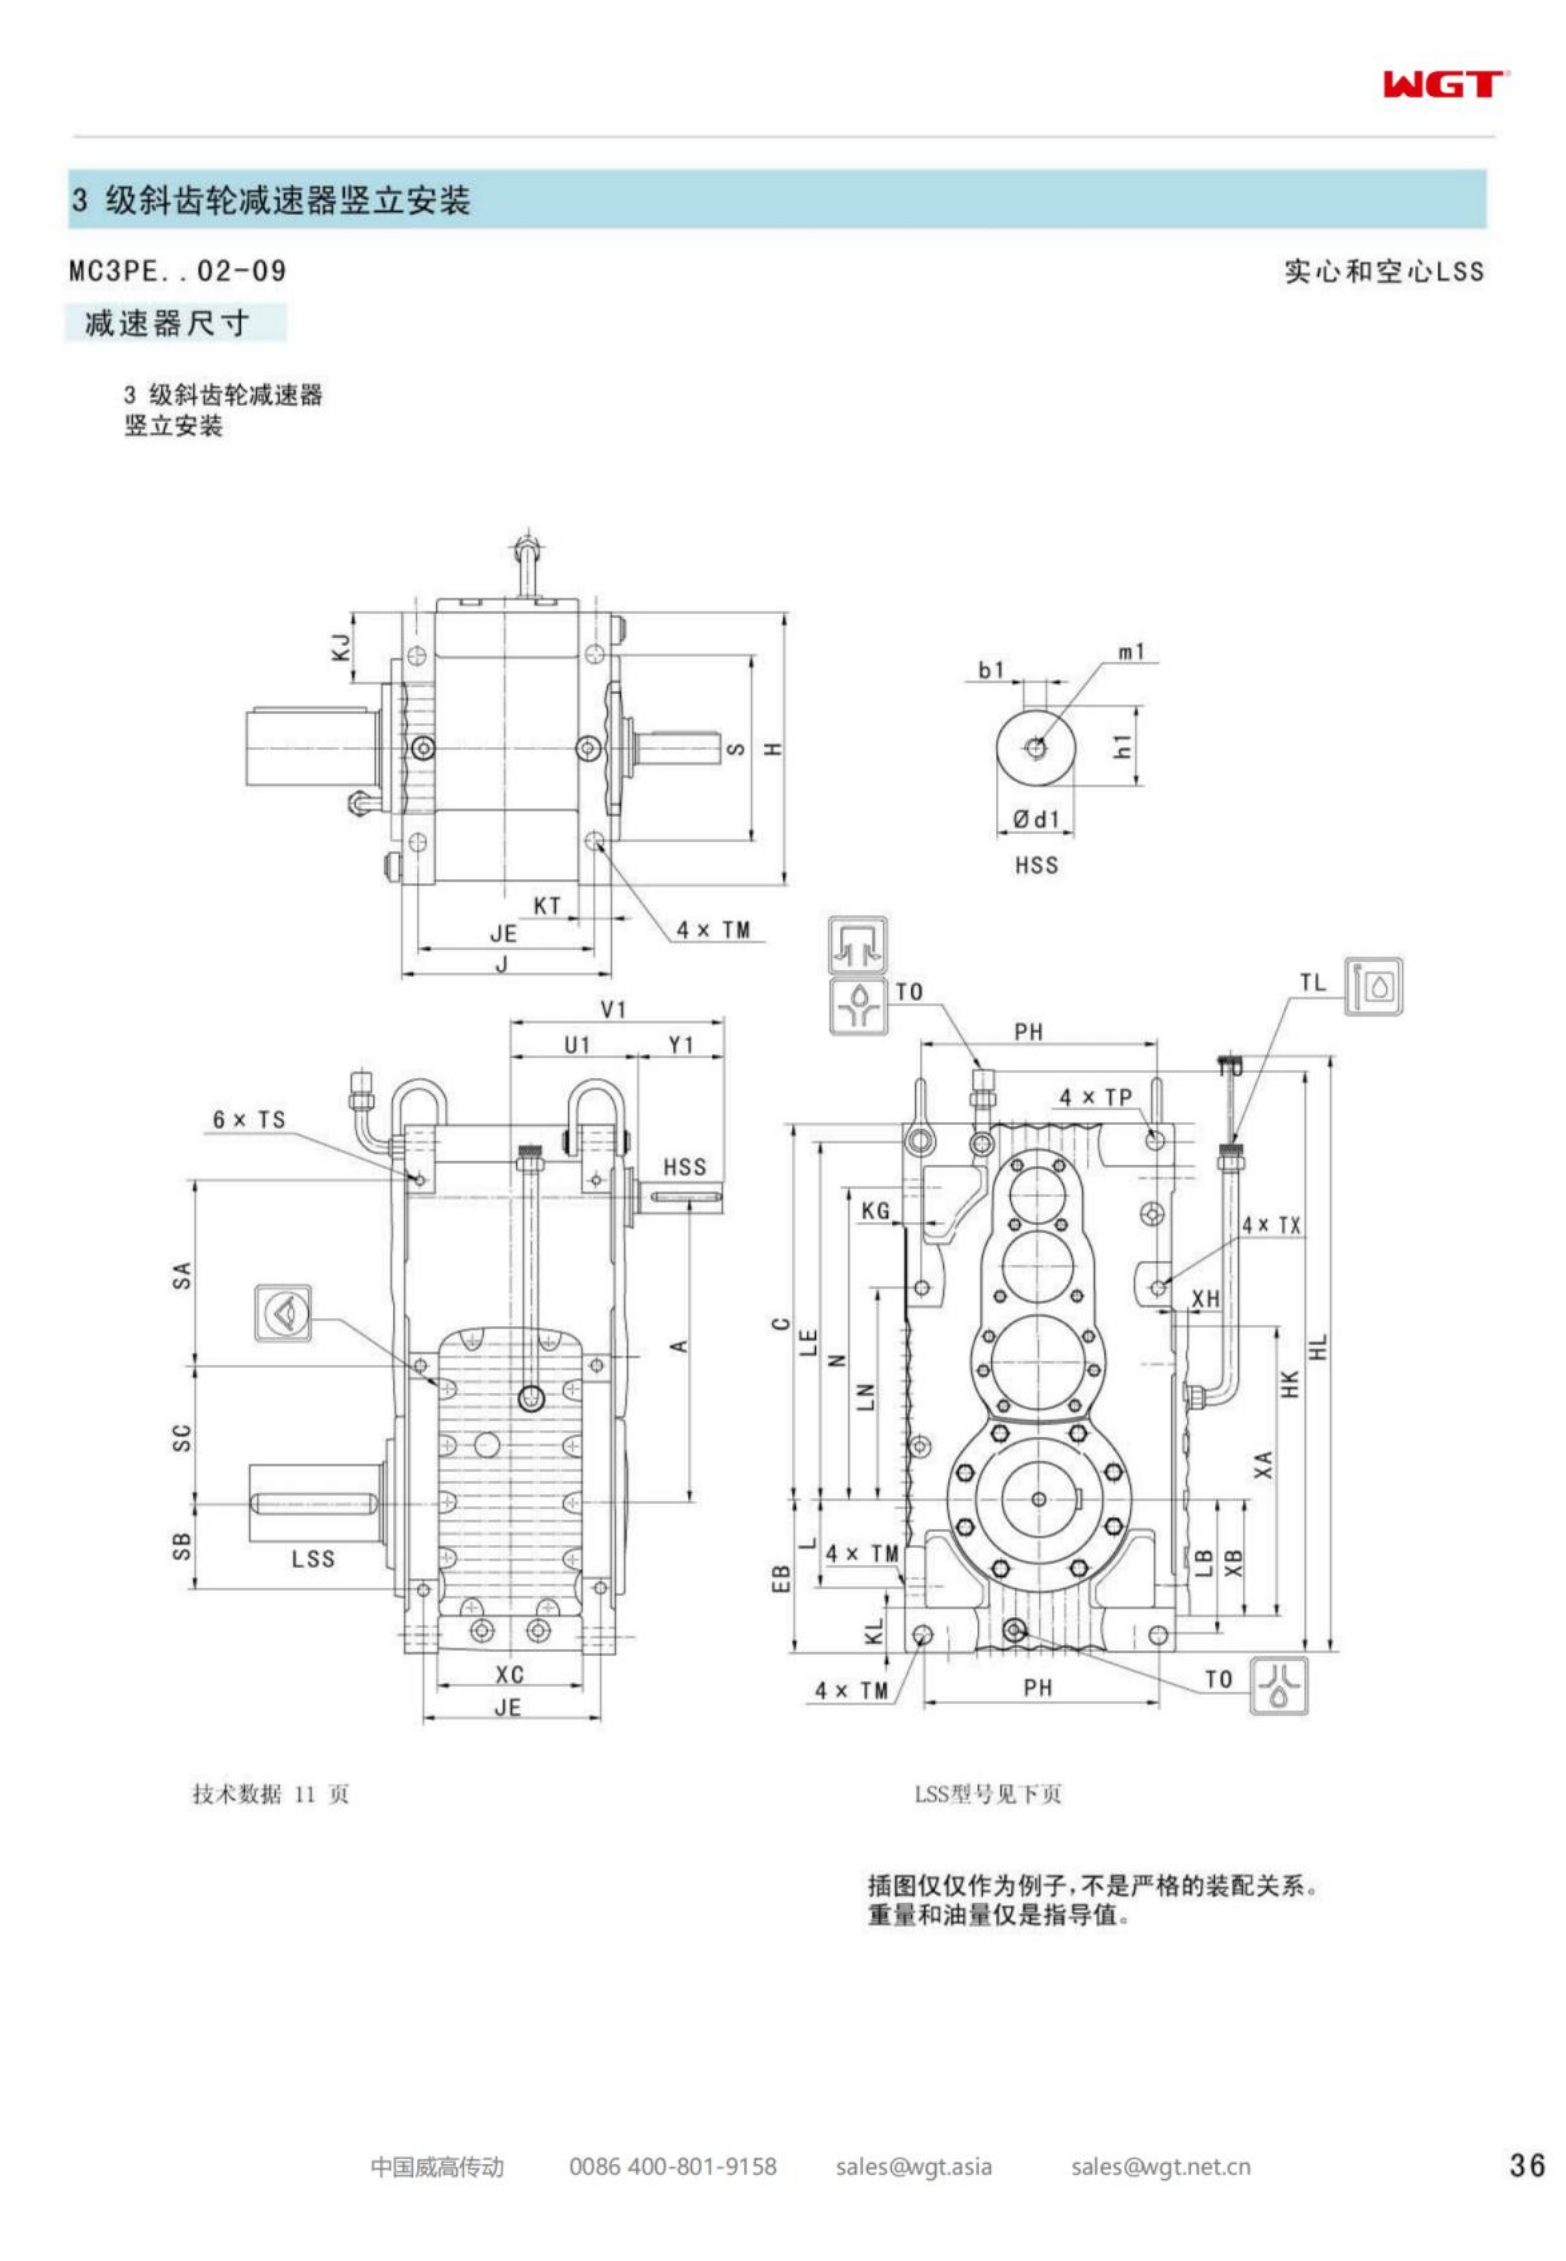 MC3PEHT04 replaces _SEW_MC_ series gearbox (patent)